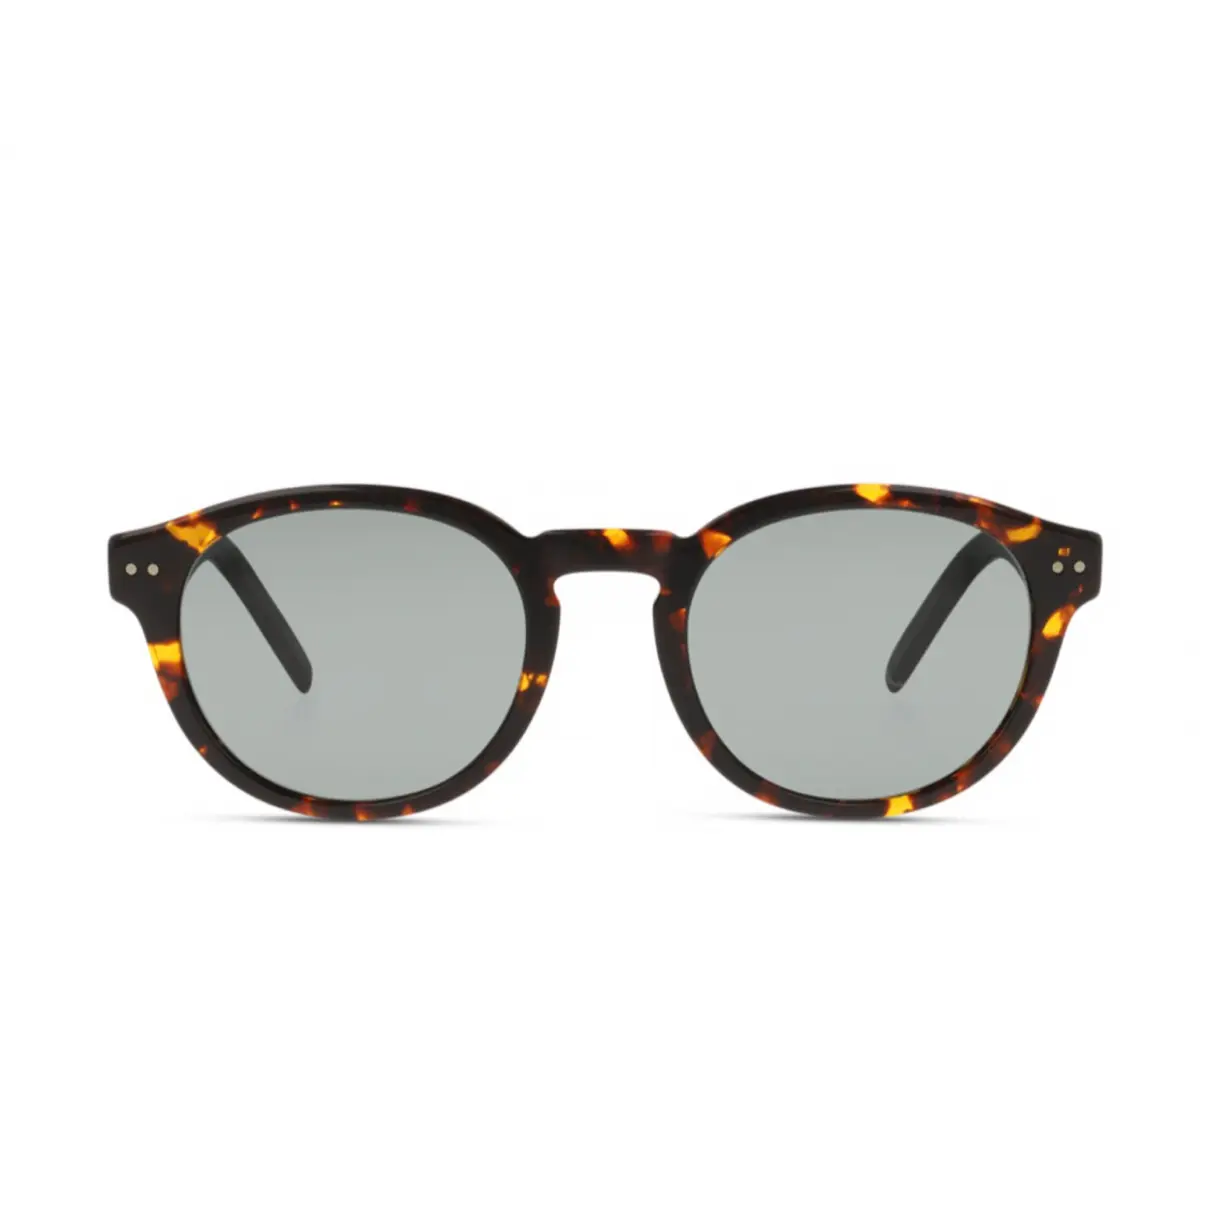 Buy Tommy Hilfiger Sunglasses online